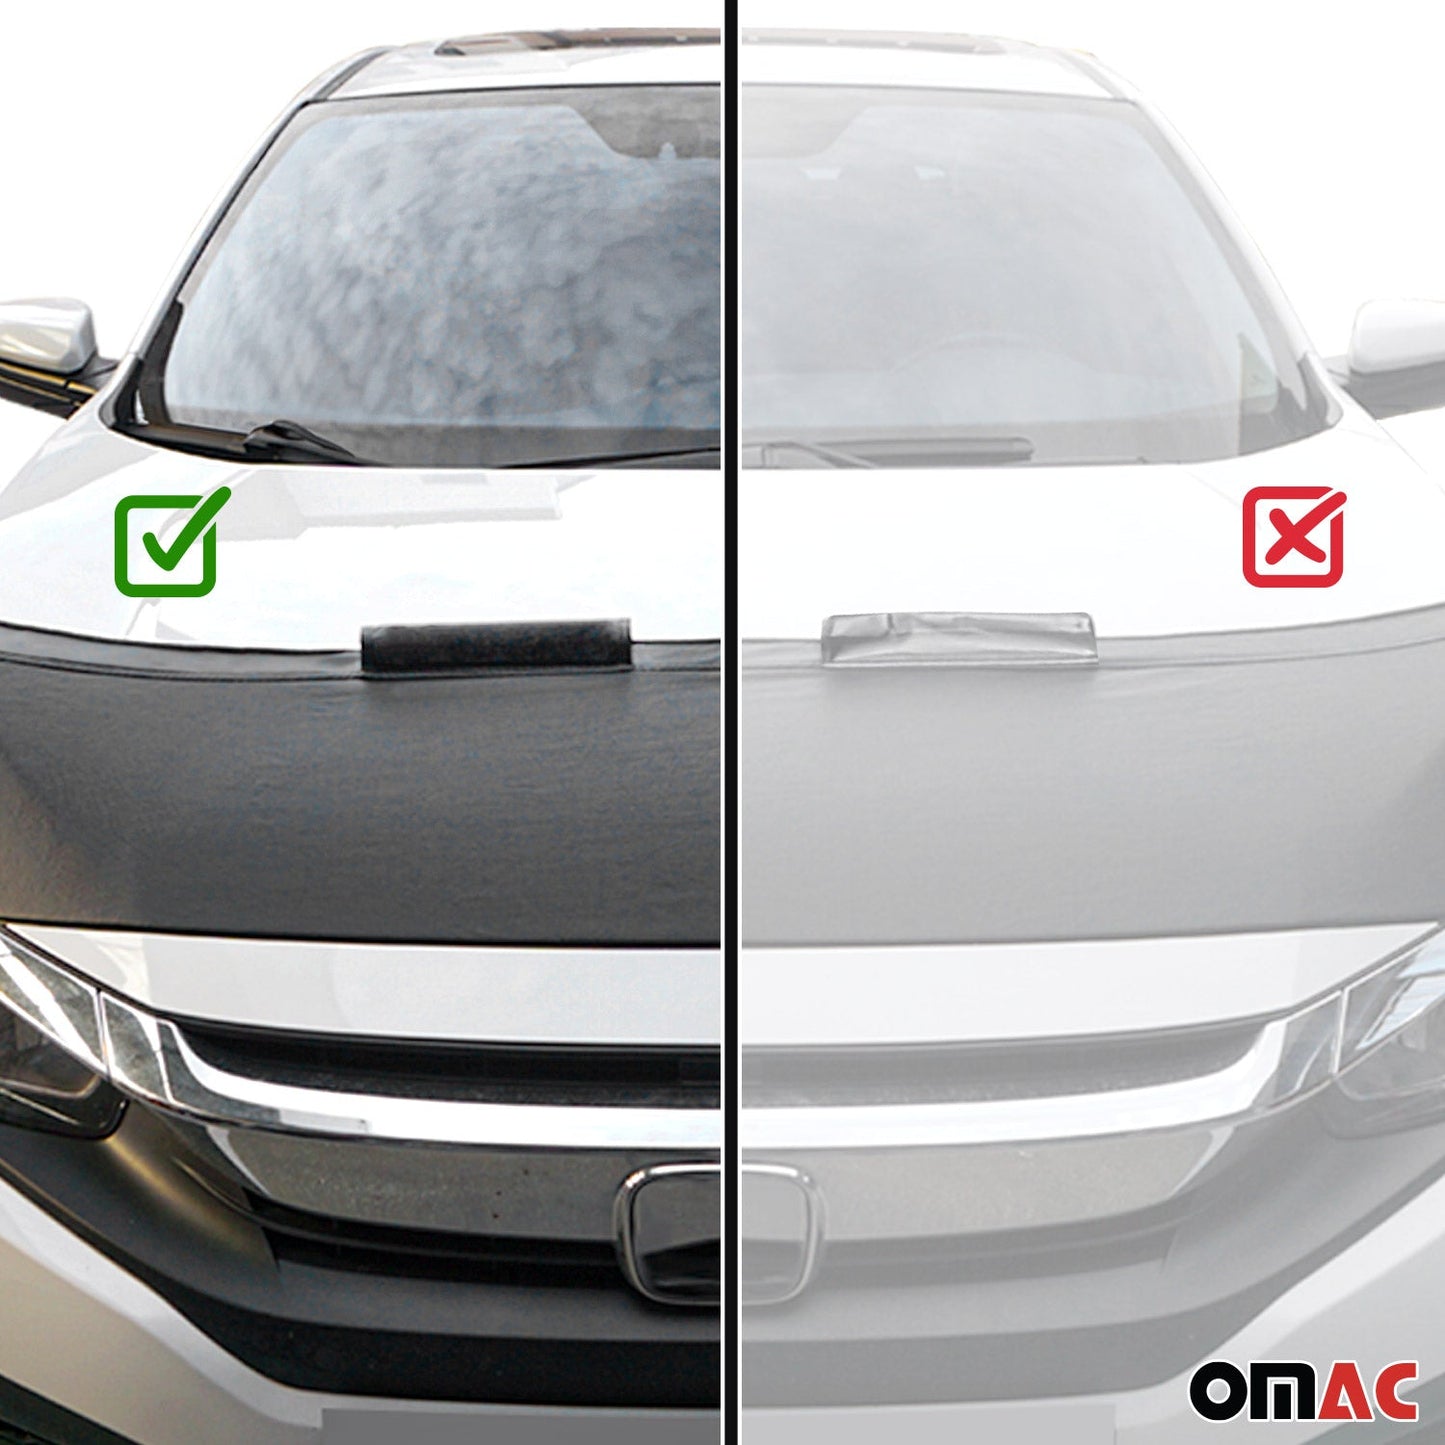 OMAC Car Bonnet Mask Hood Bra for Ford Transit Connect 2014-2019 Black 1 Pc 2627BSZ4